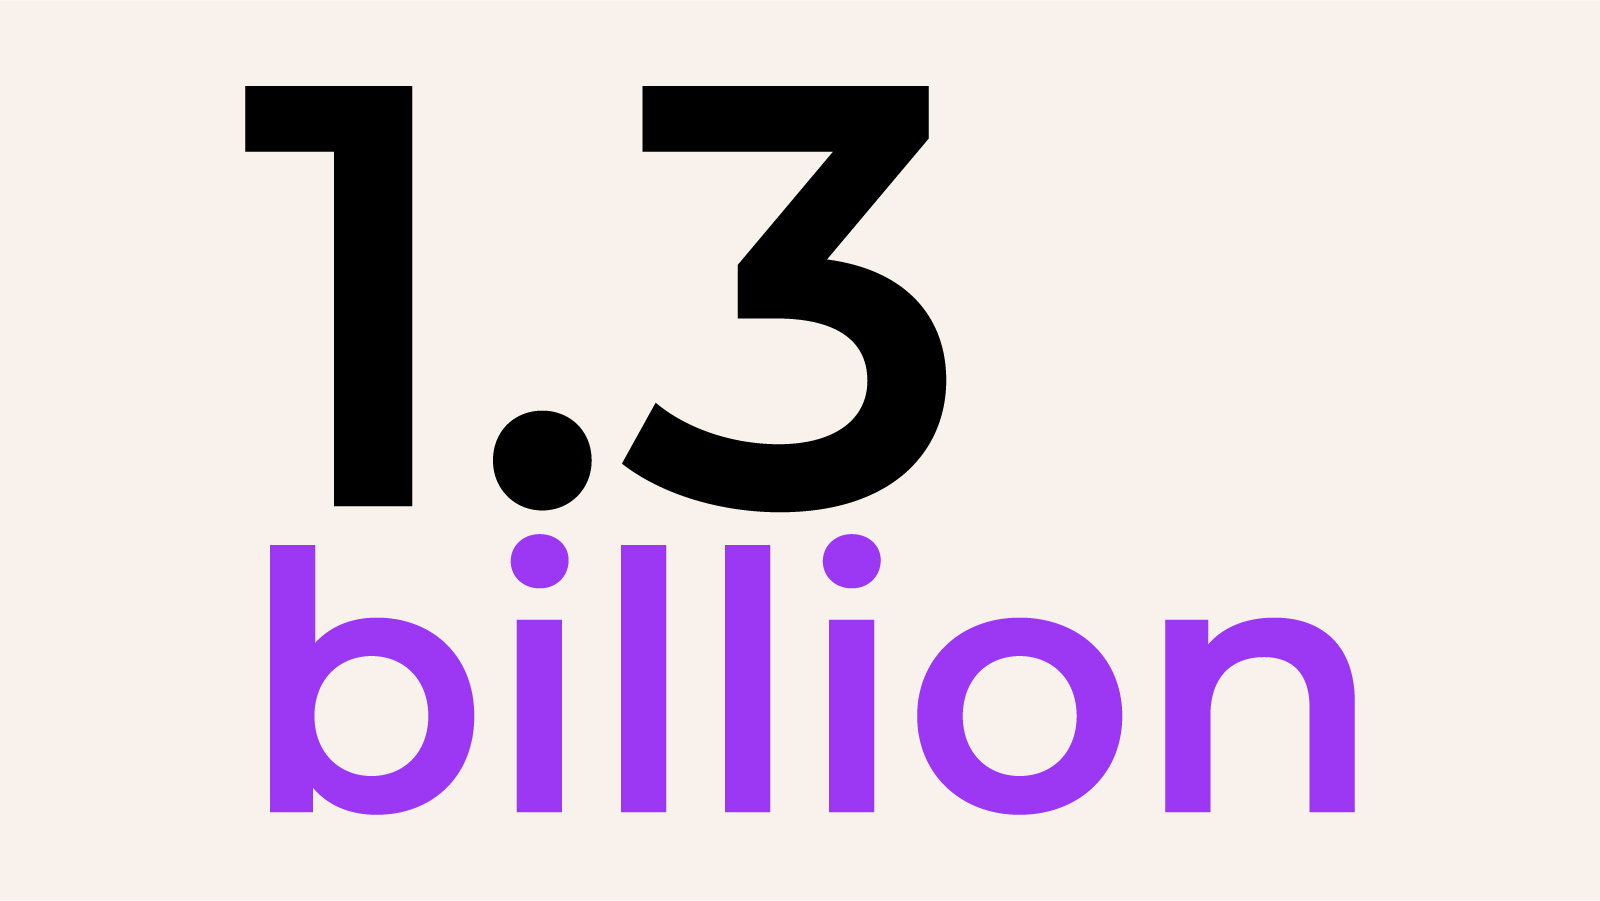 1.3 billion